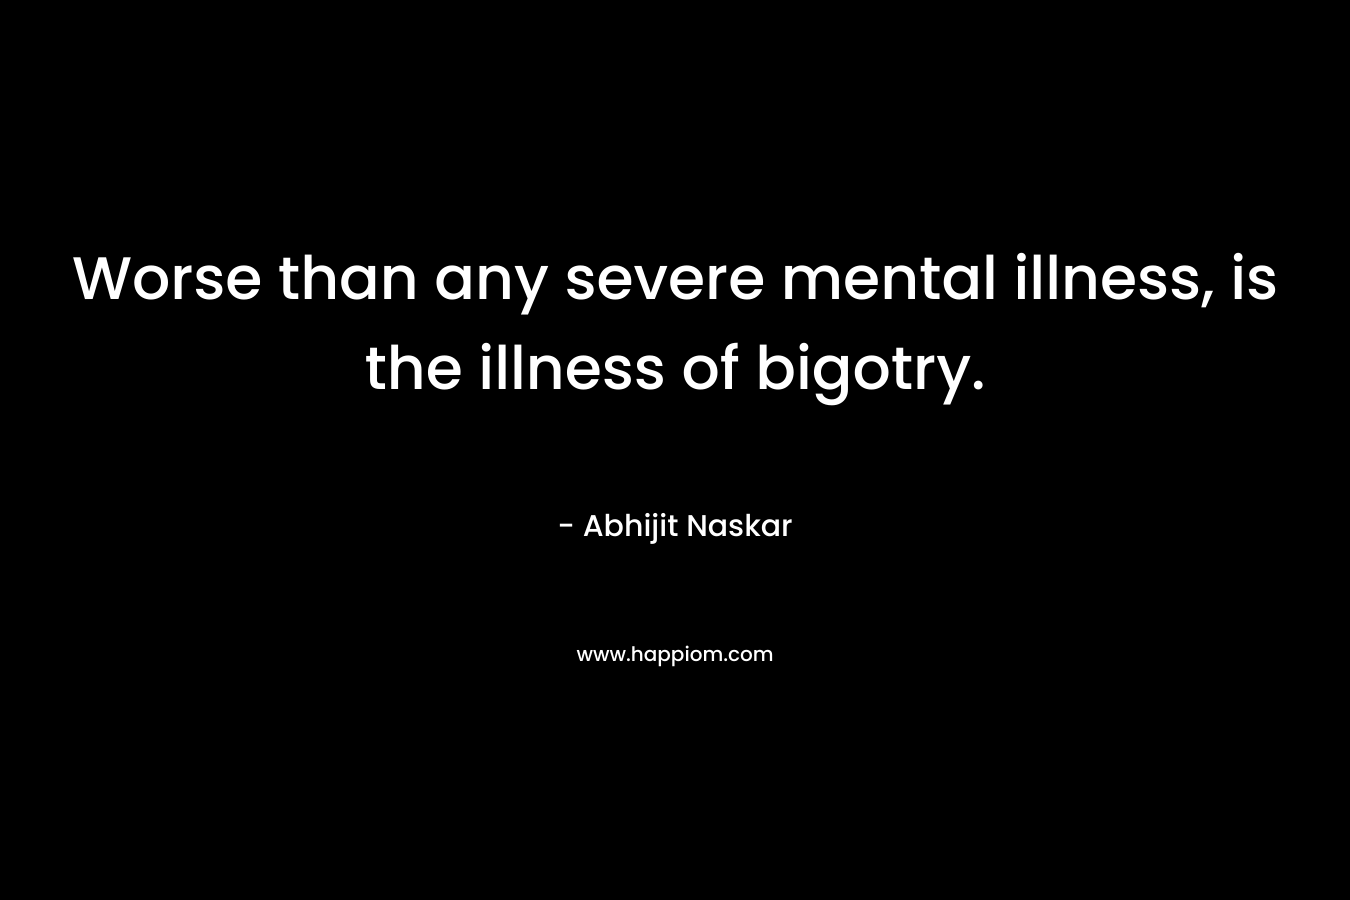 Worse than any severe mental illness, is the illness of bigotry. – Abhijit Naskar